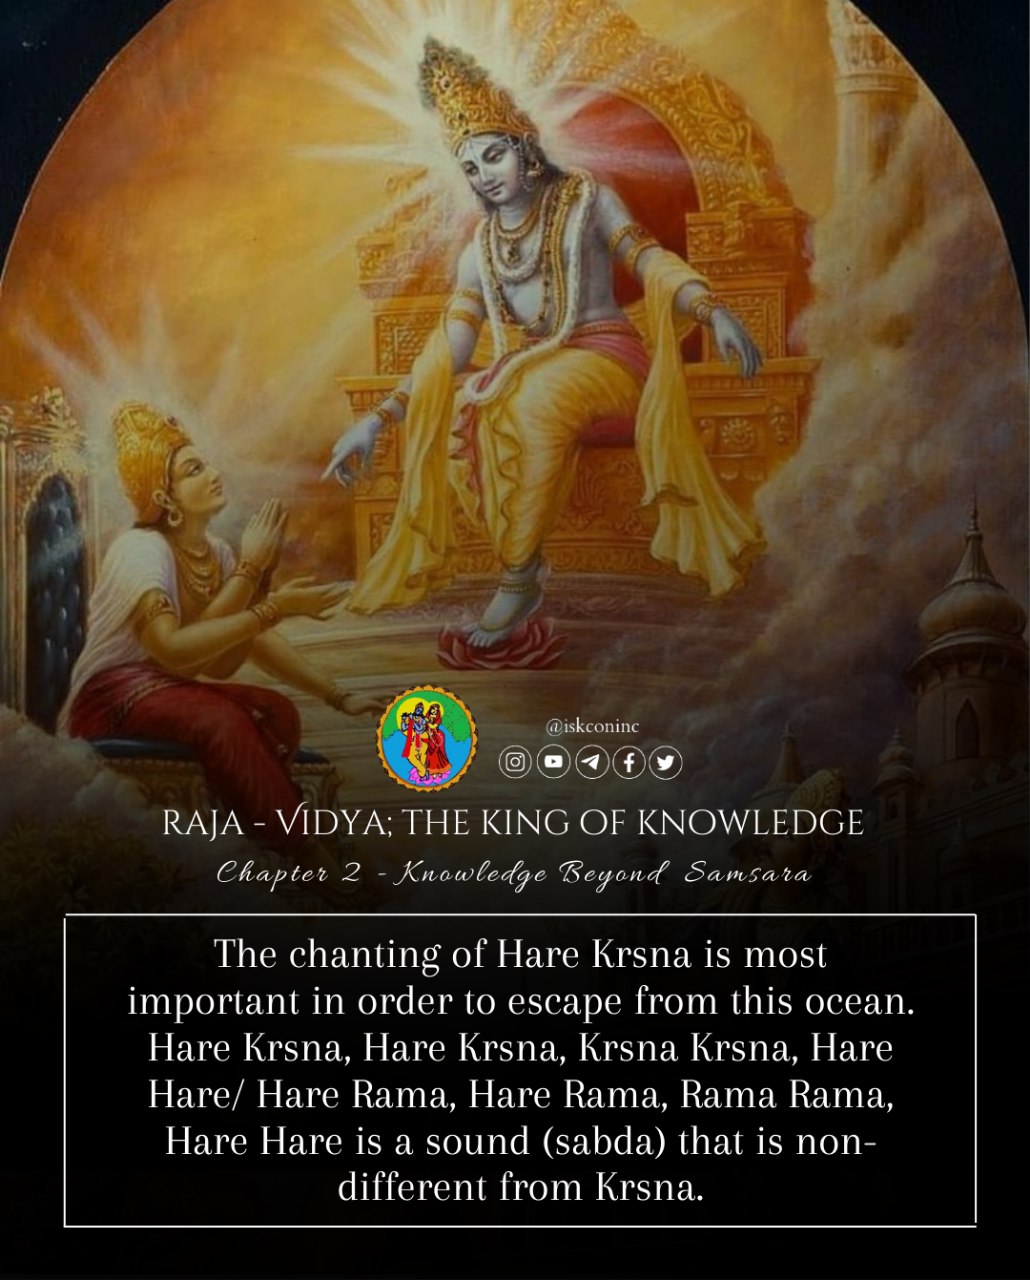 Iskcon,Inc. on X: Can you all chant Hare Krishna Hare Krishna